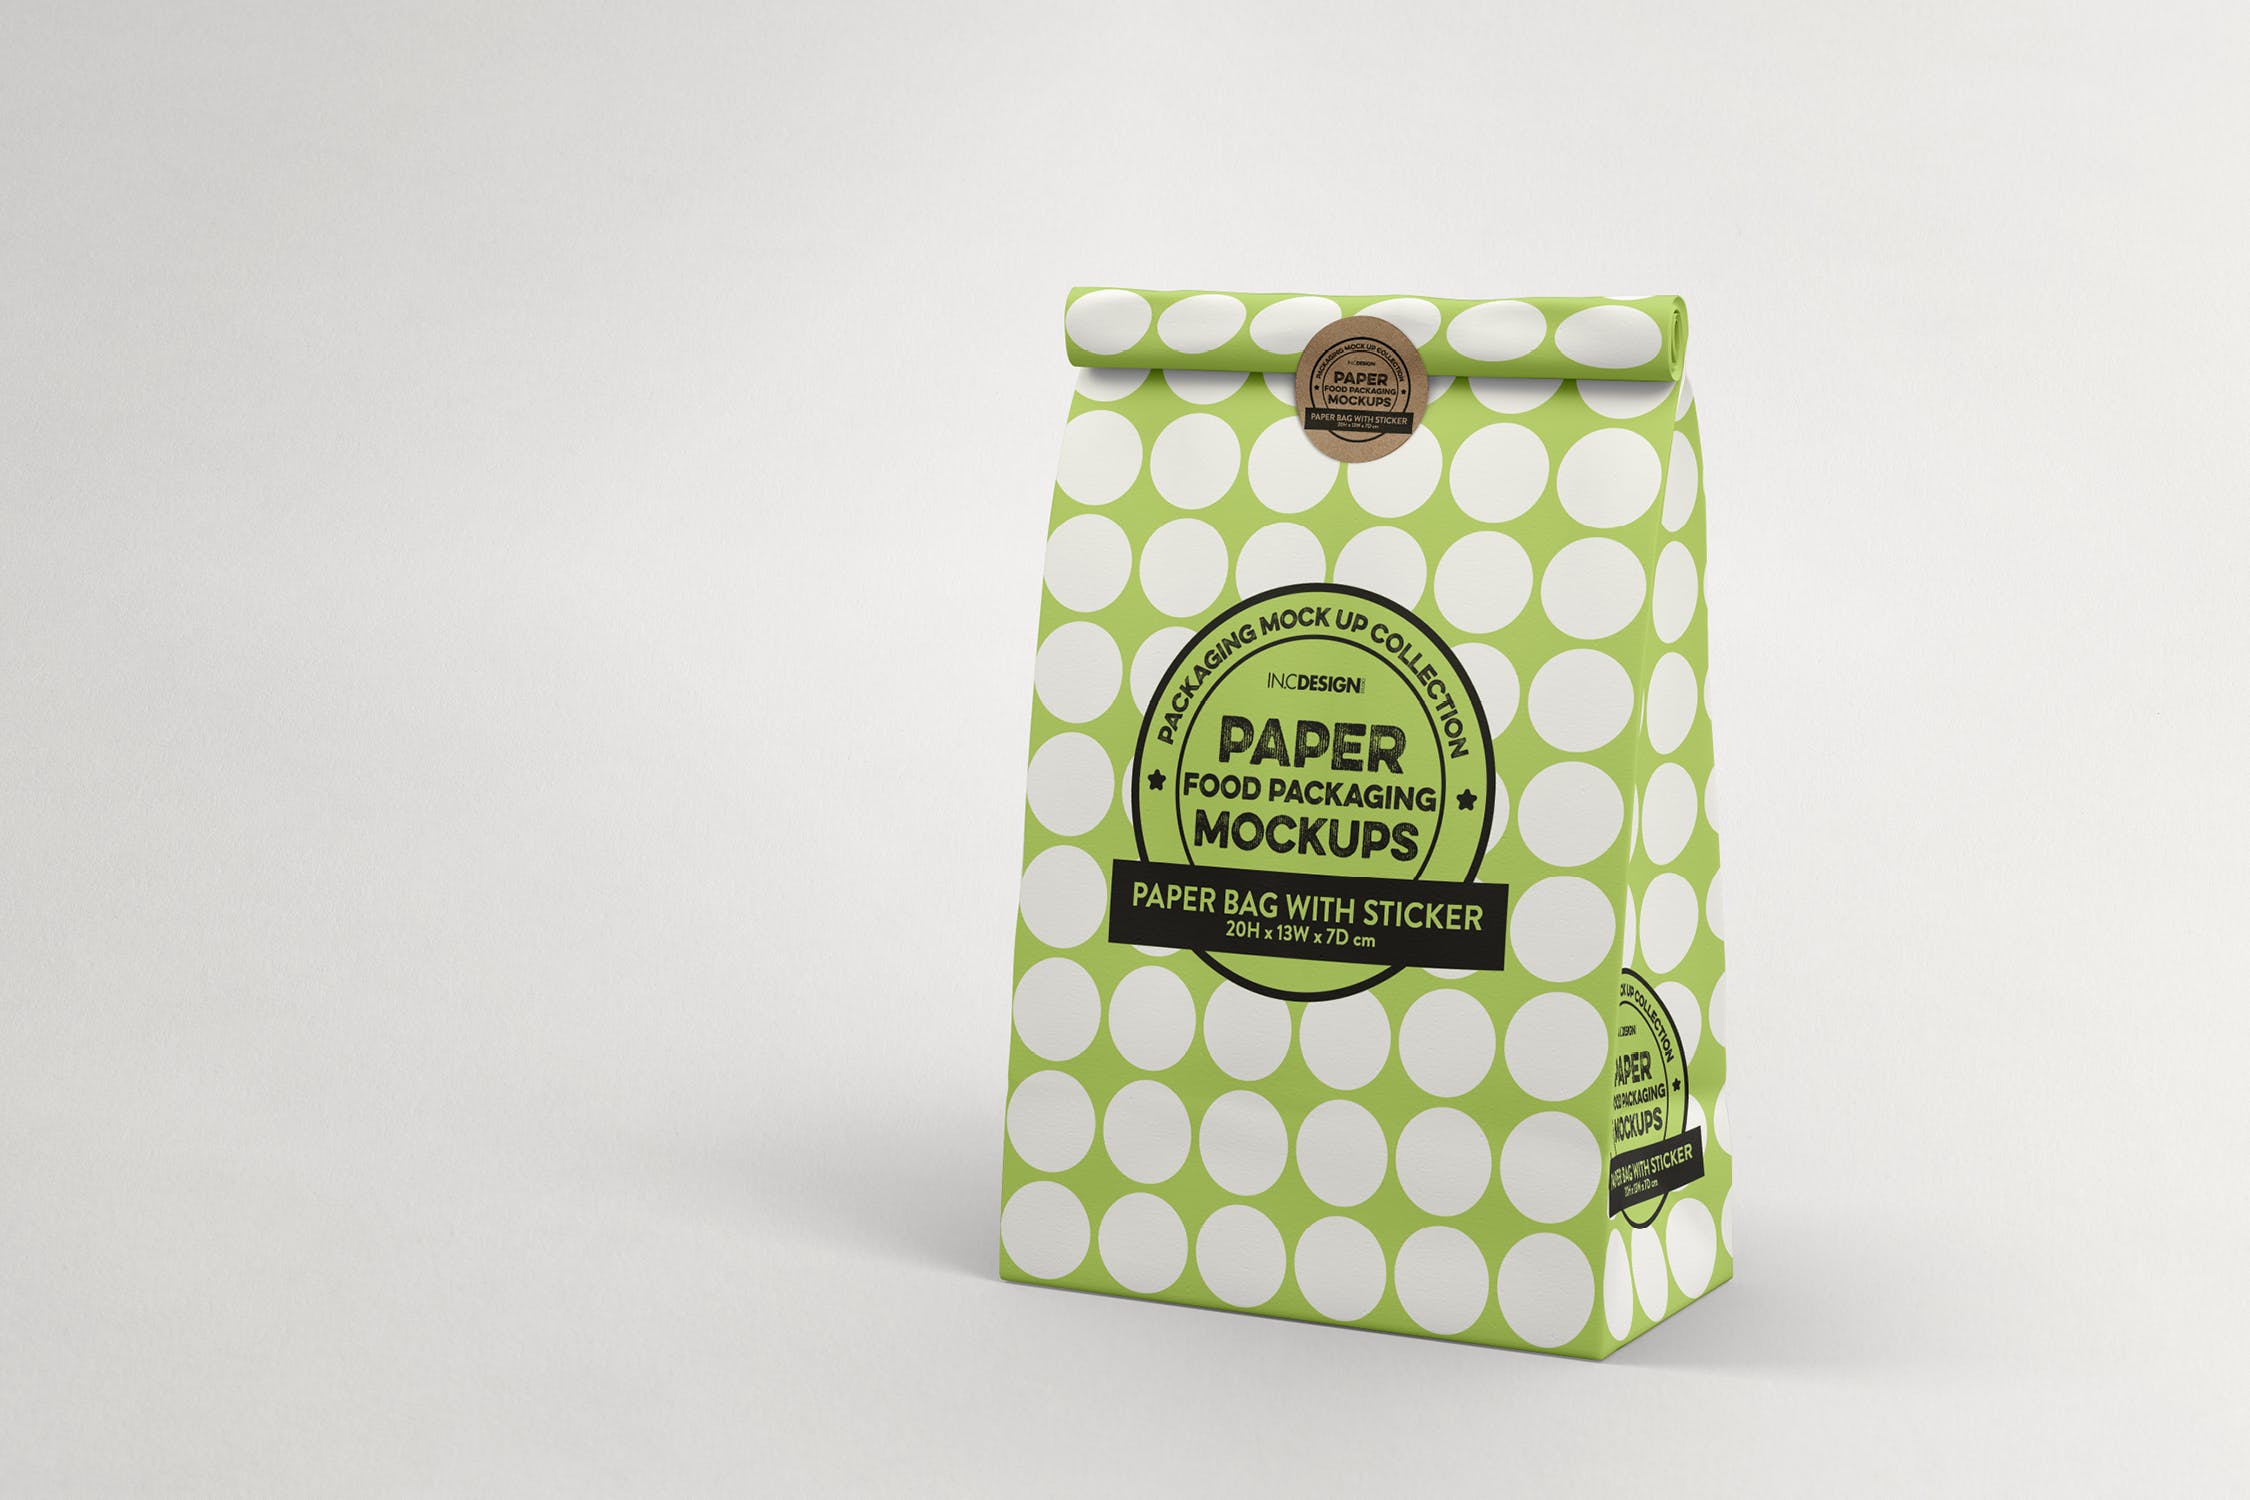 贴纸密封包装纸袋设计效果图非凡图库精选 Paper Bag with sticker Seal Packaging Mockup插图(2)